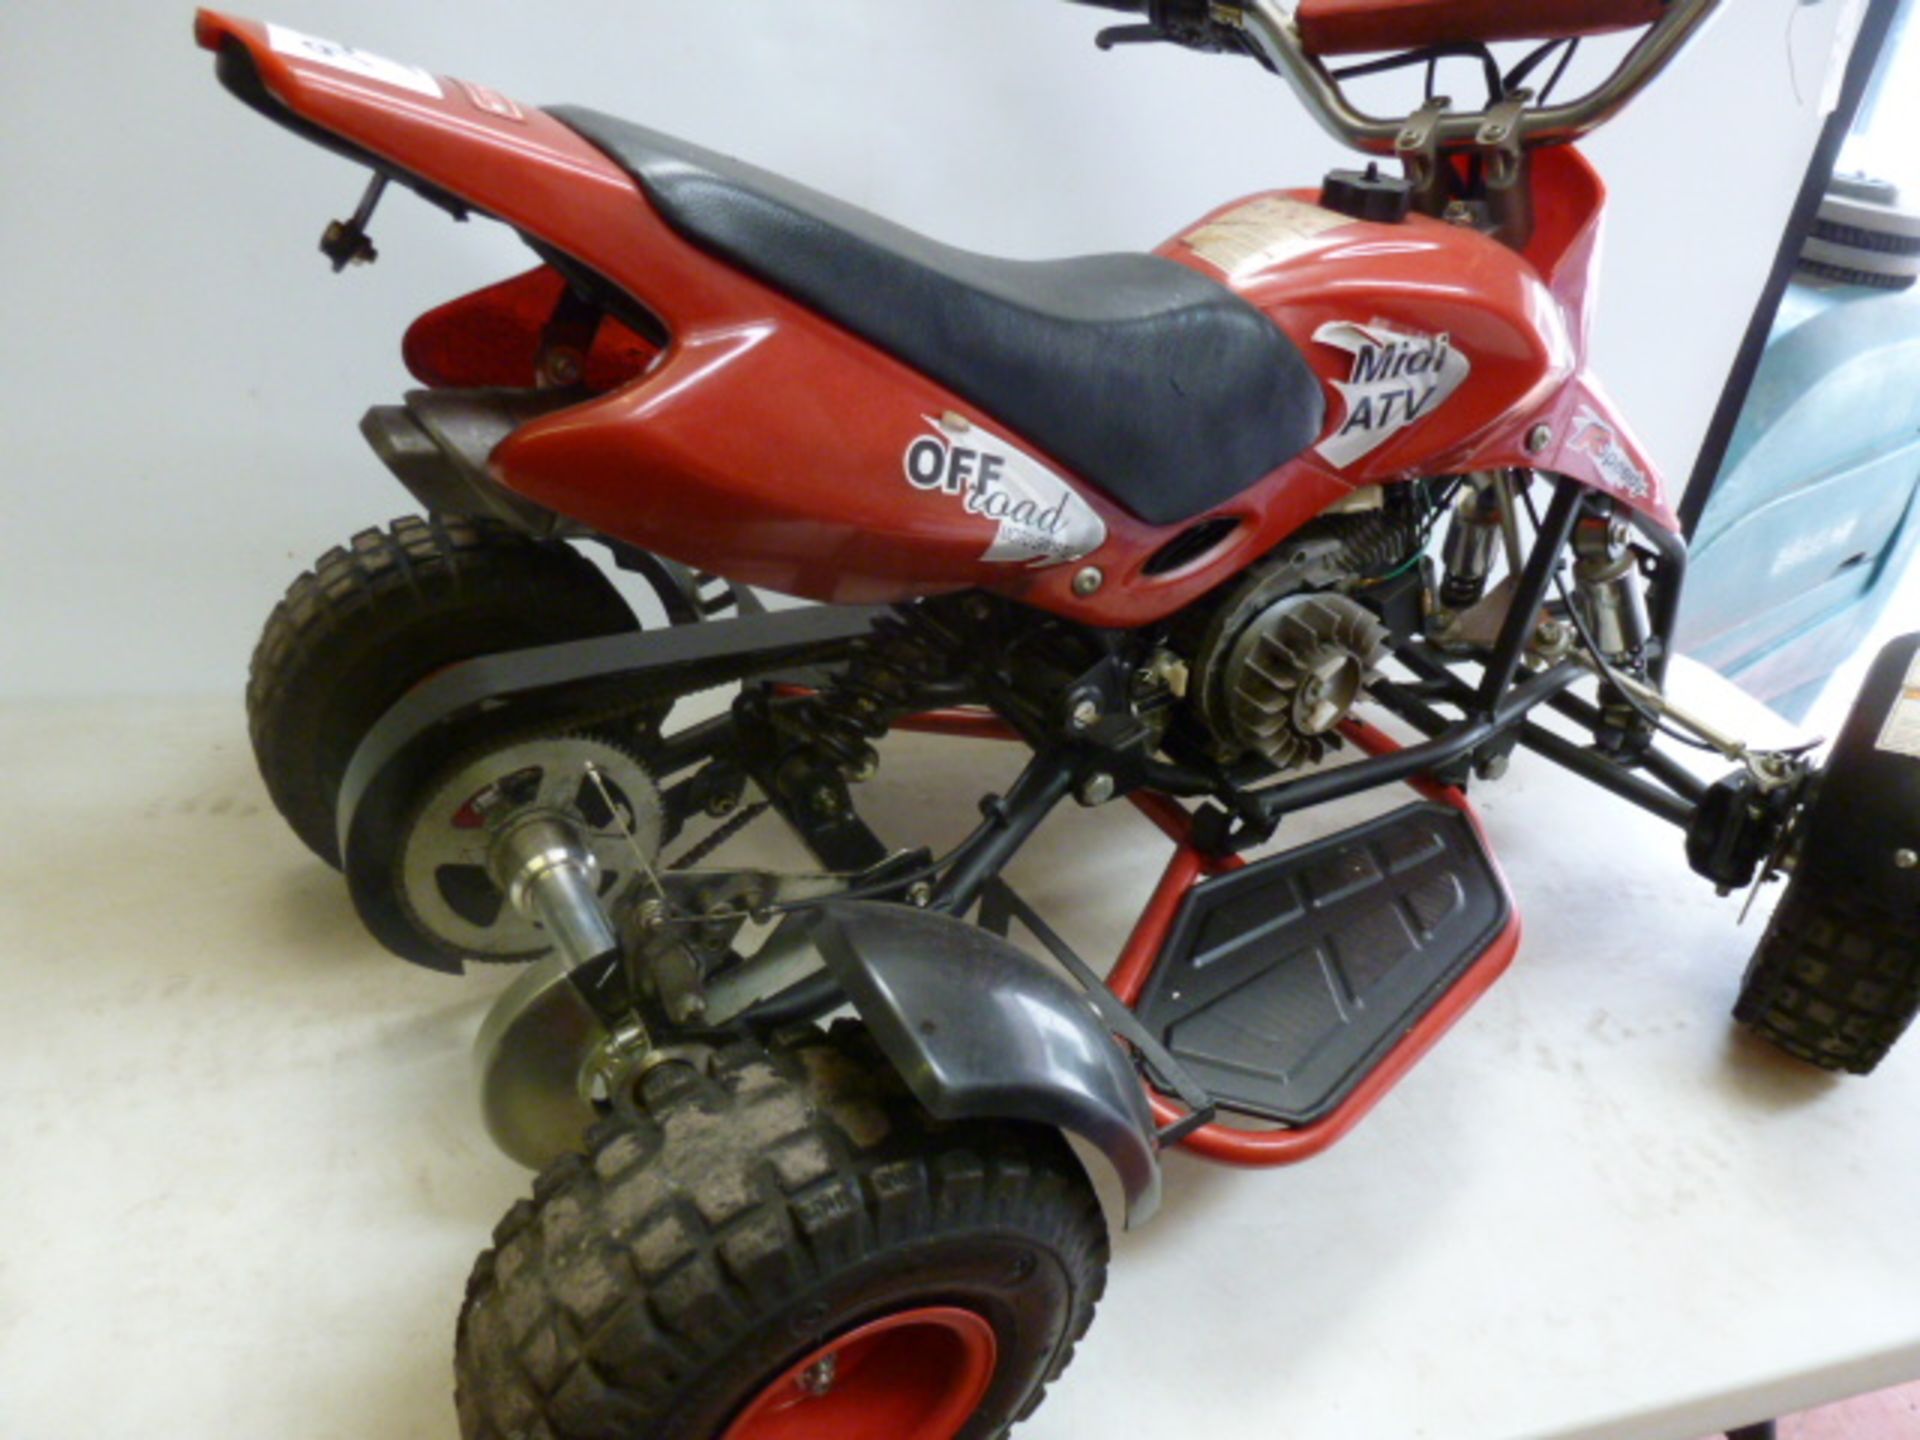 ZHEJING LYAA Company Ltd Off Road, Midi ATV Kids Petrol Quad Bike in Red. Model QD01, Year 2012, - Image 4 of 9